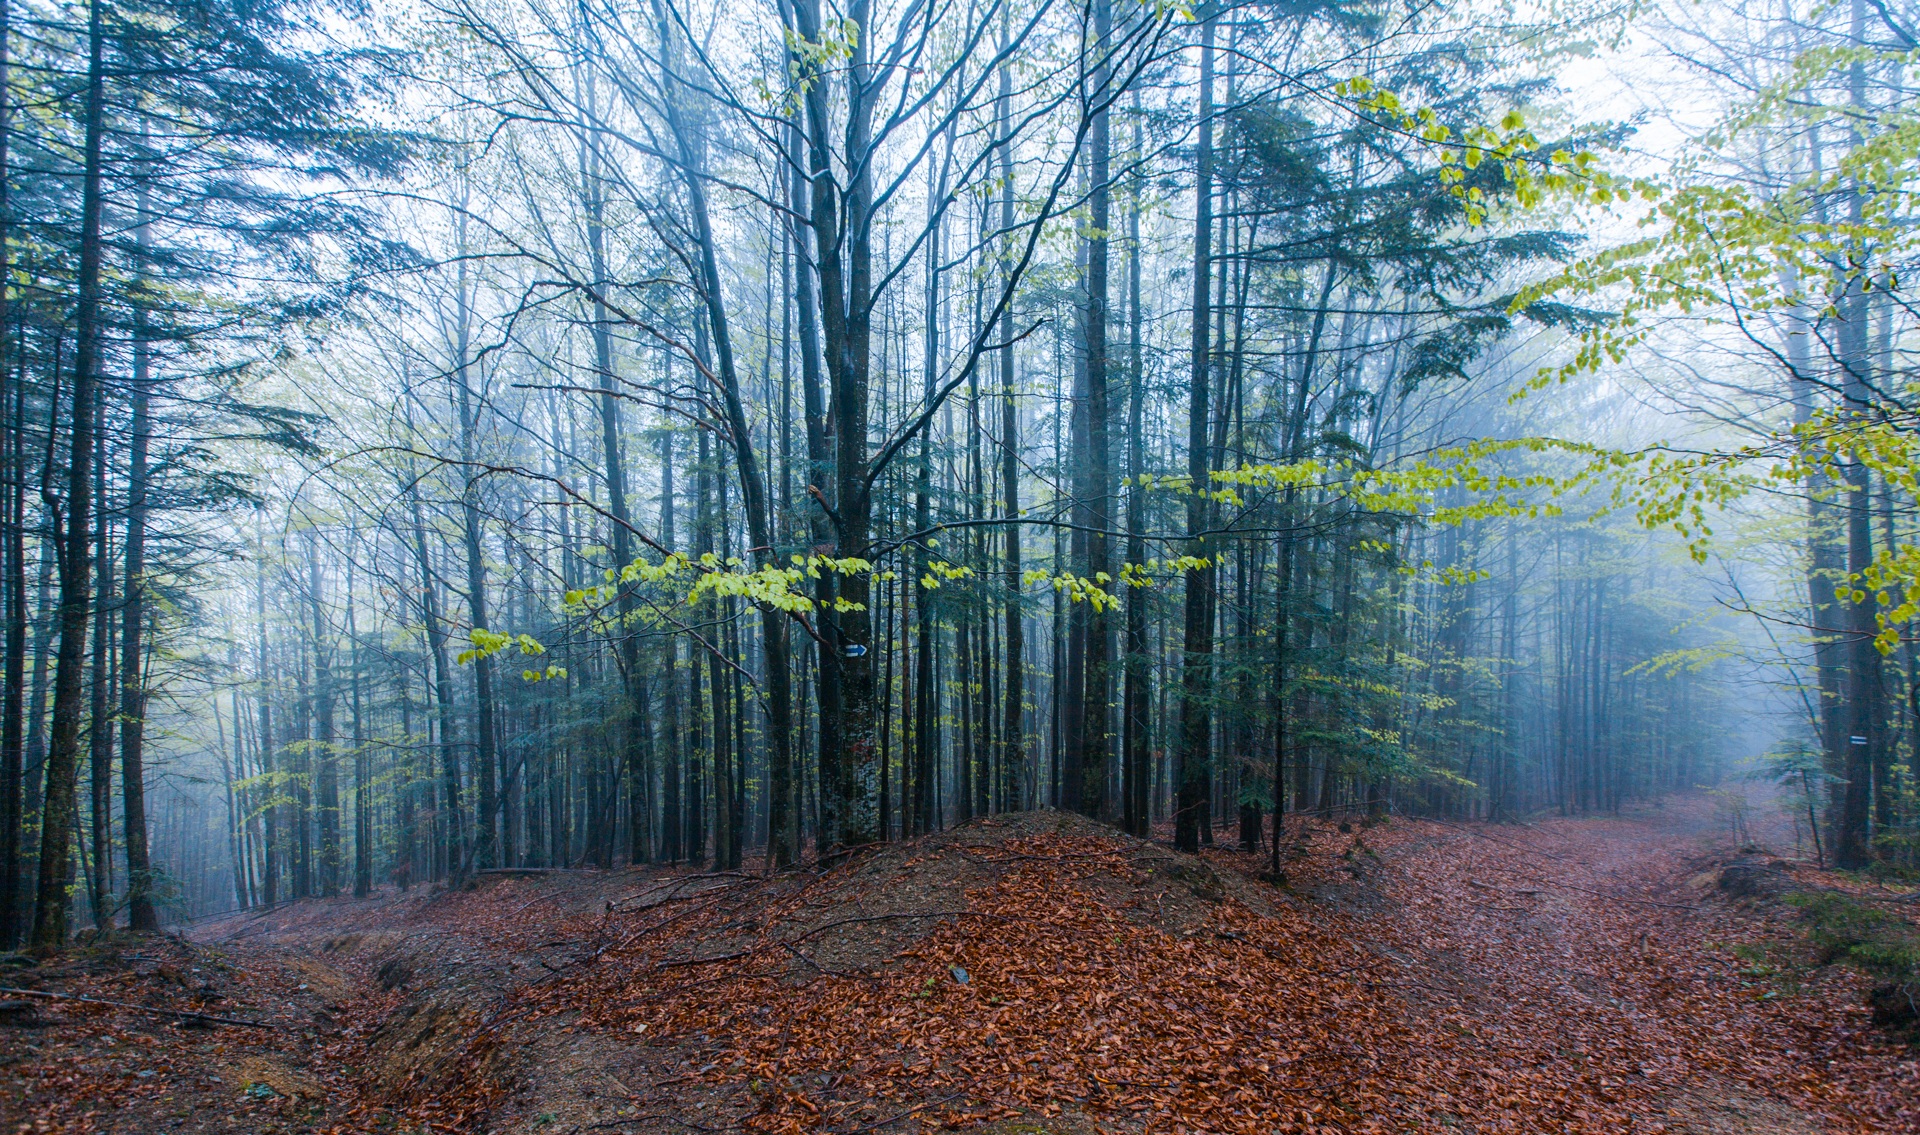 Буковые леса в тумане